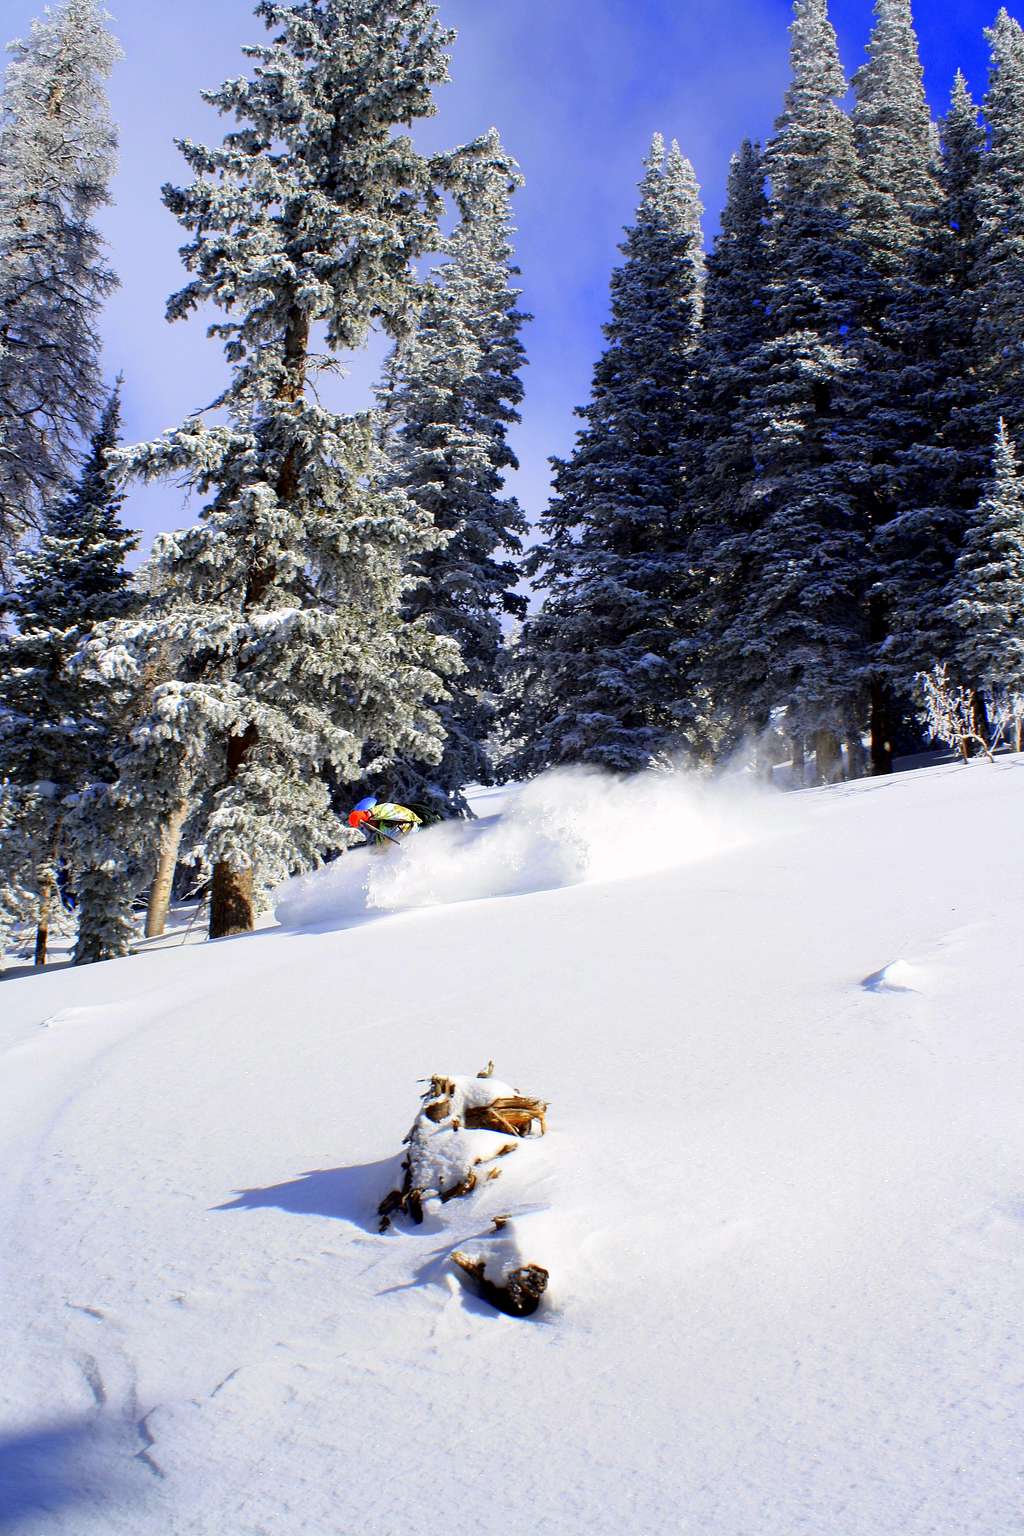 Troy skiing down Beartrap